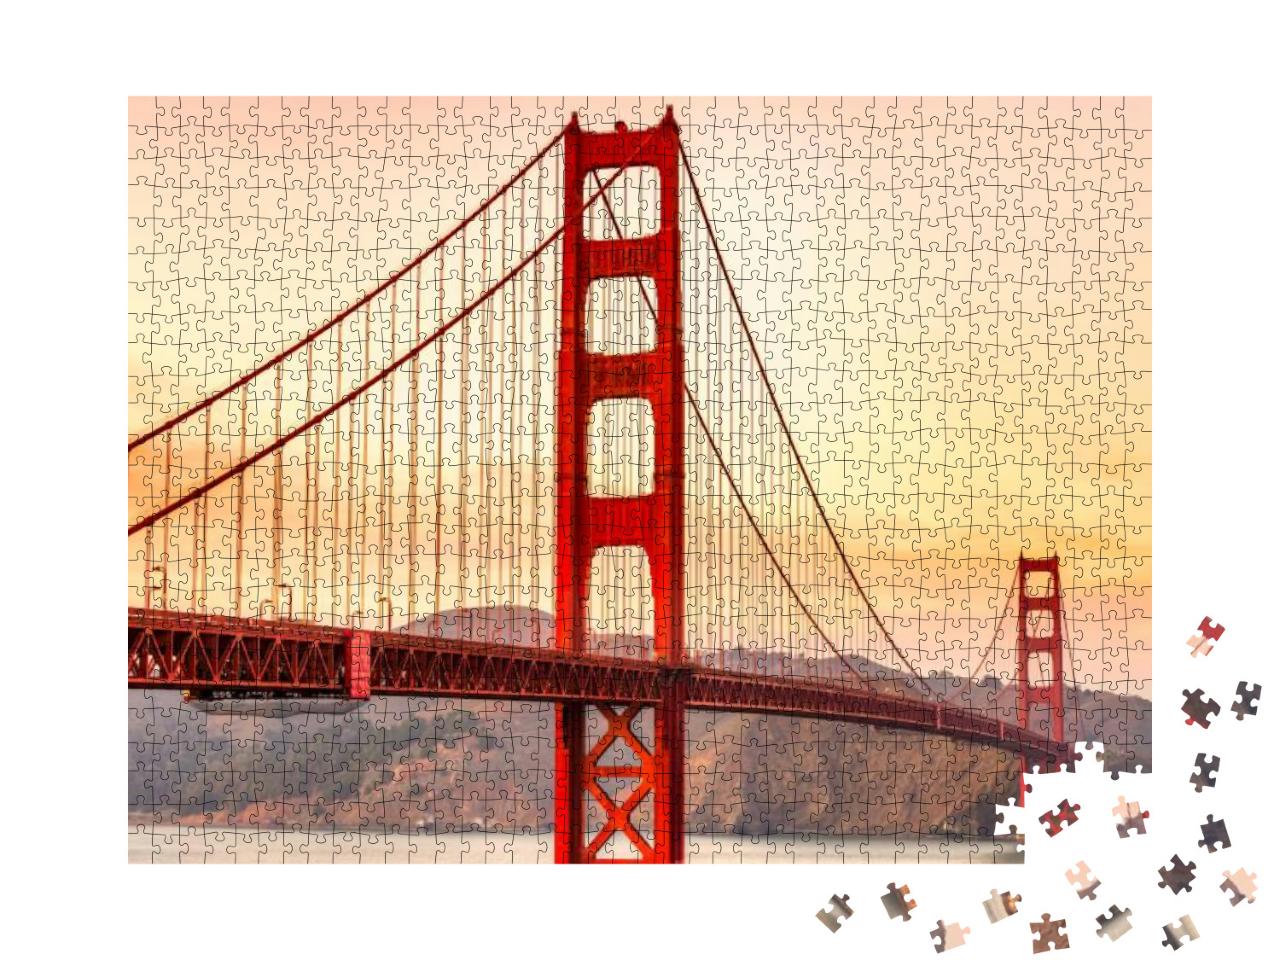 Golden Gate Bridge in San Francisco, California, Usa... Jigsaw Puzzle with 1000 pieces